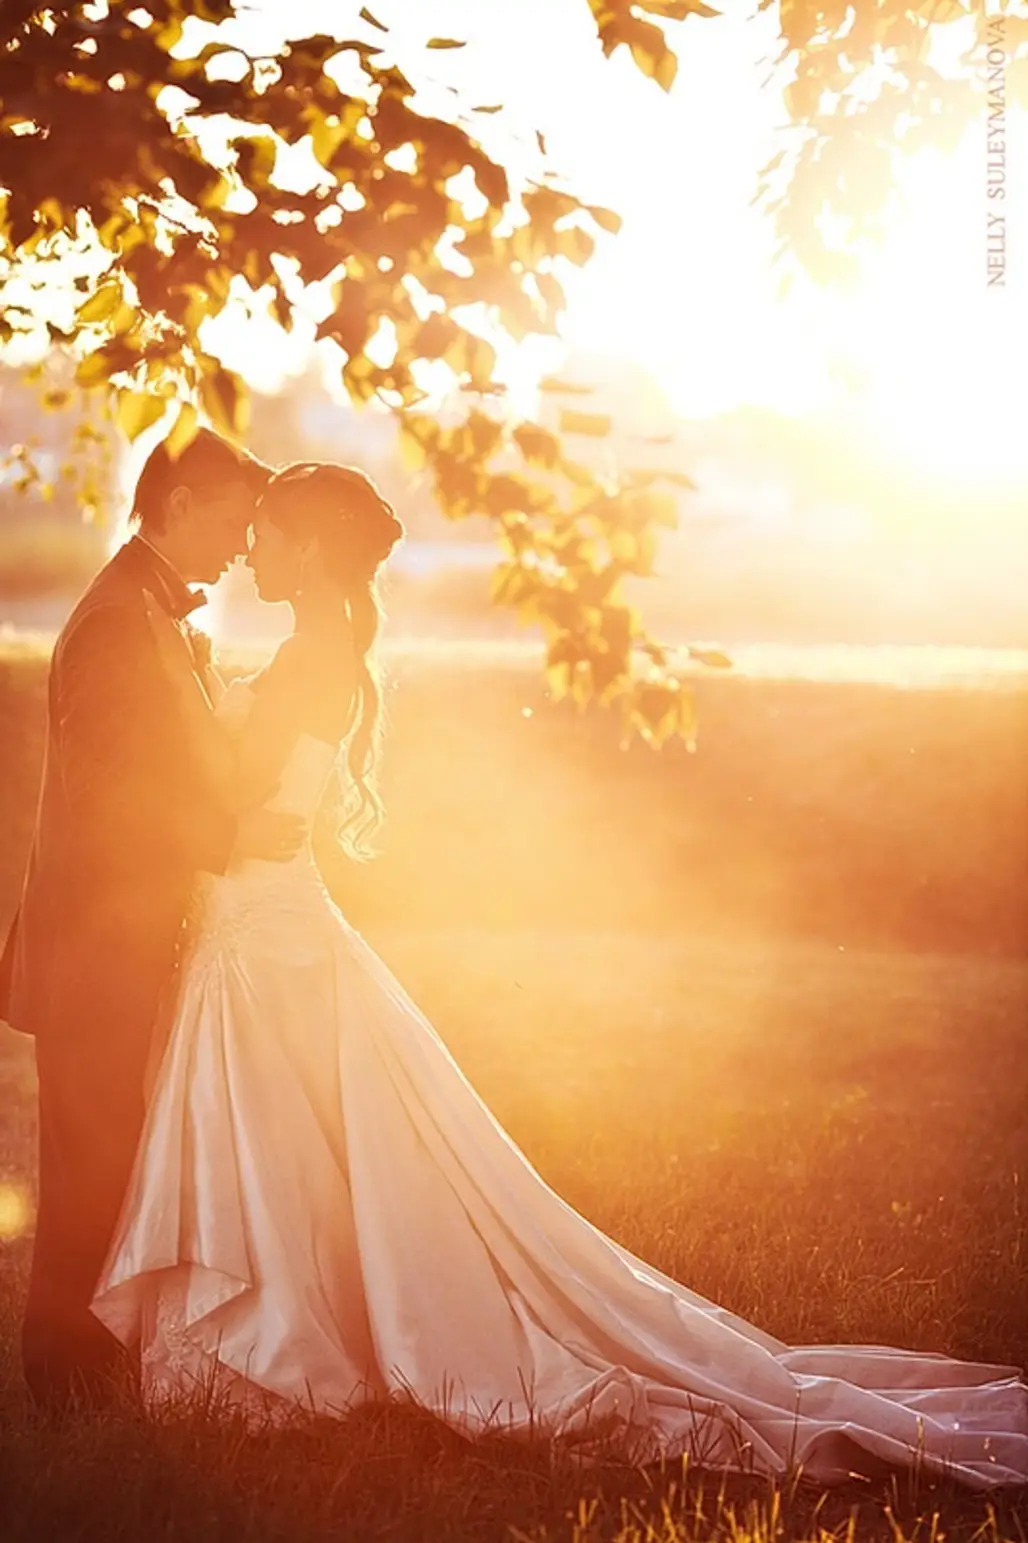 Top 10 Most Romantic Wedding Photo Ideas You'll Love -   Blog